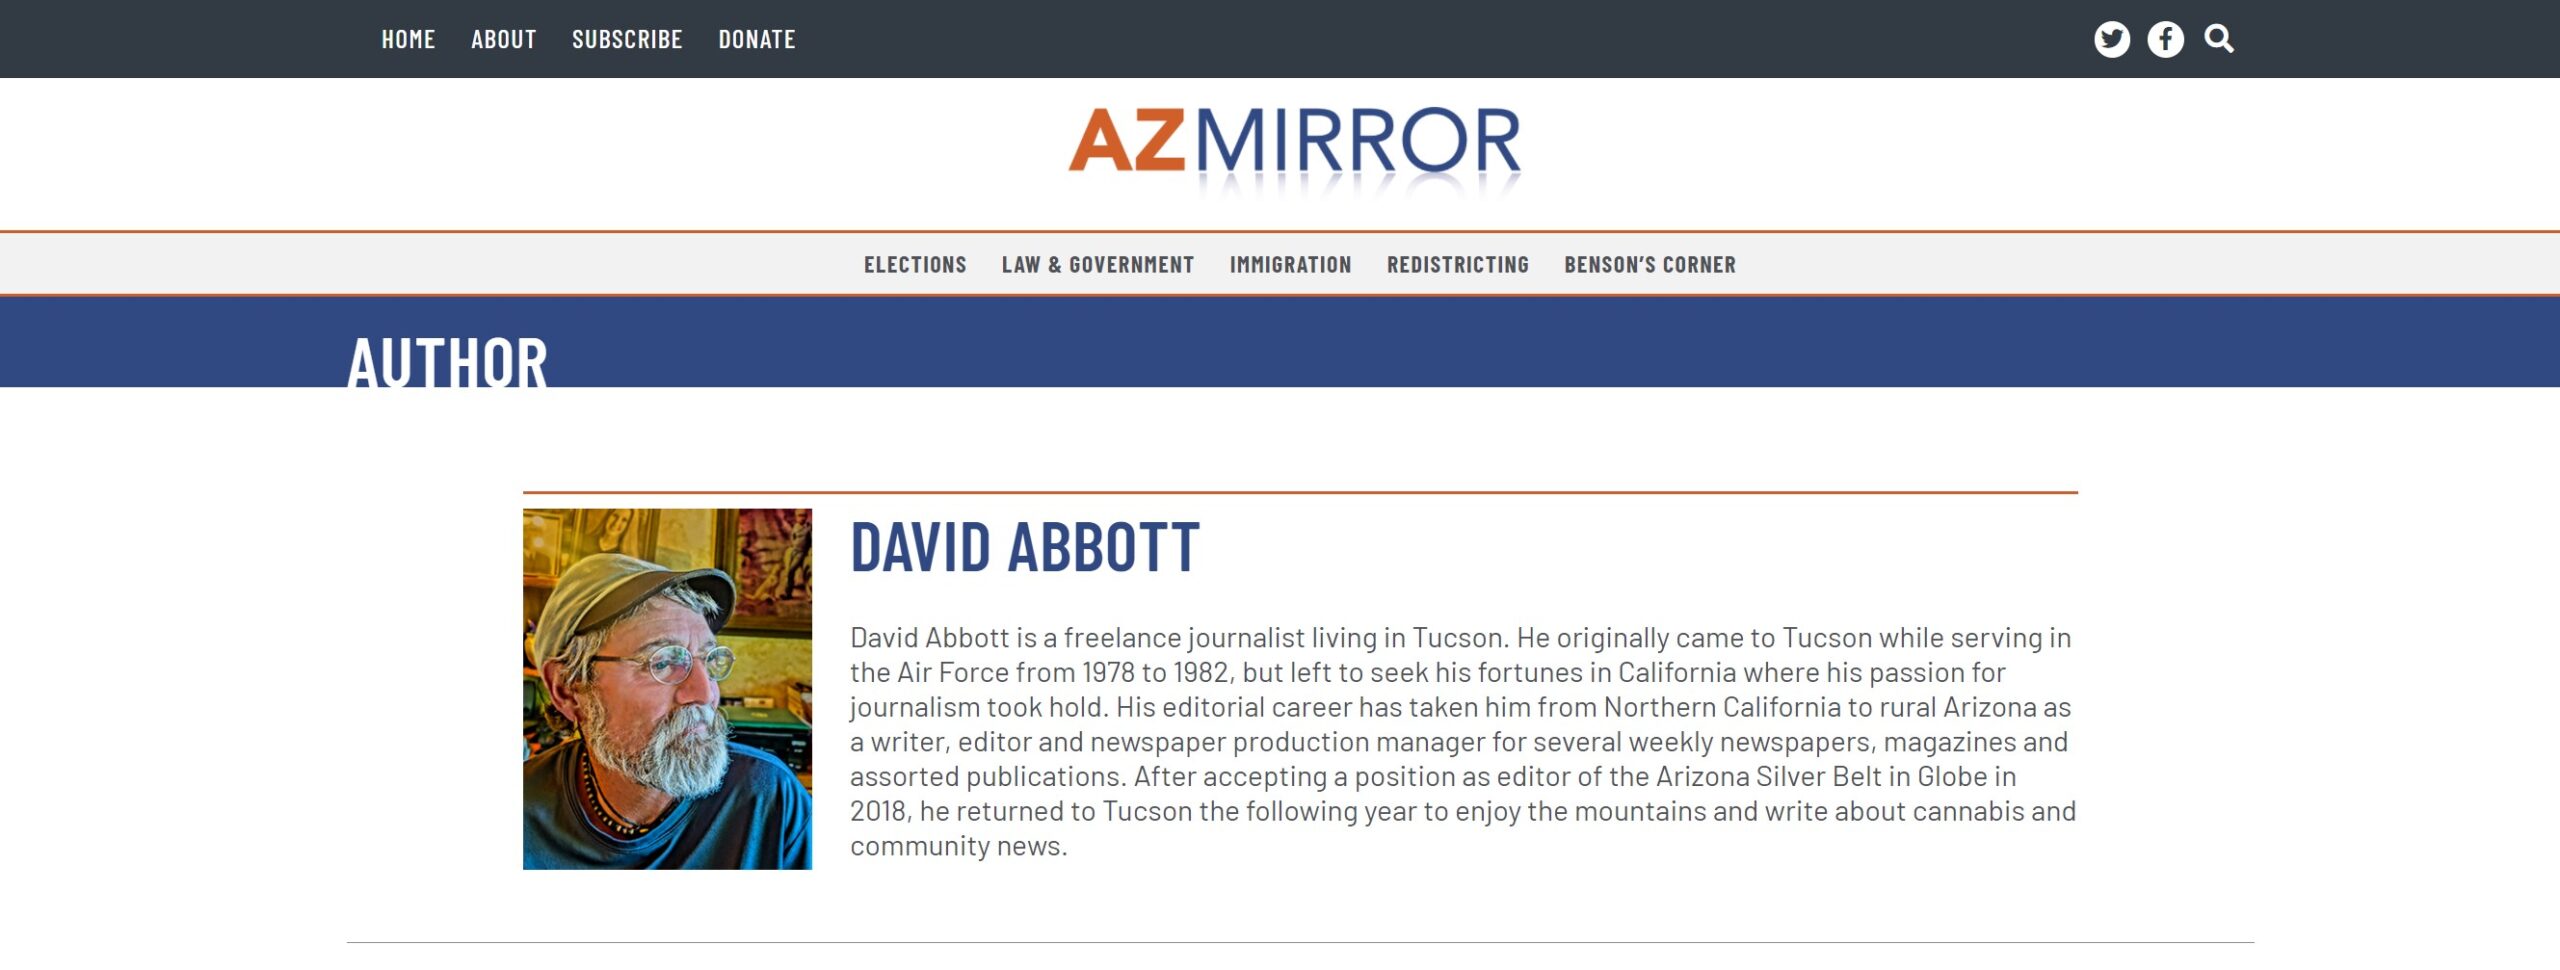 Arizona Mirror writer bio page